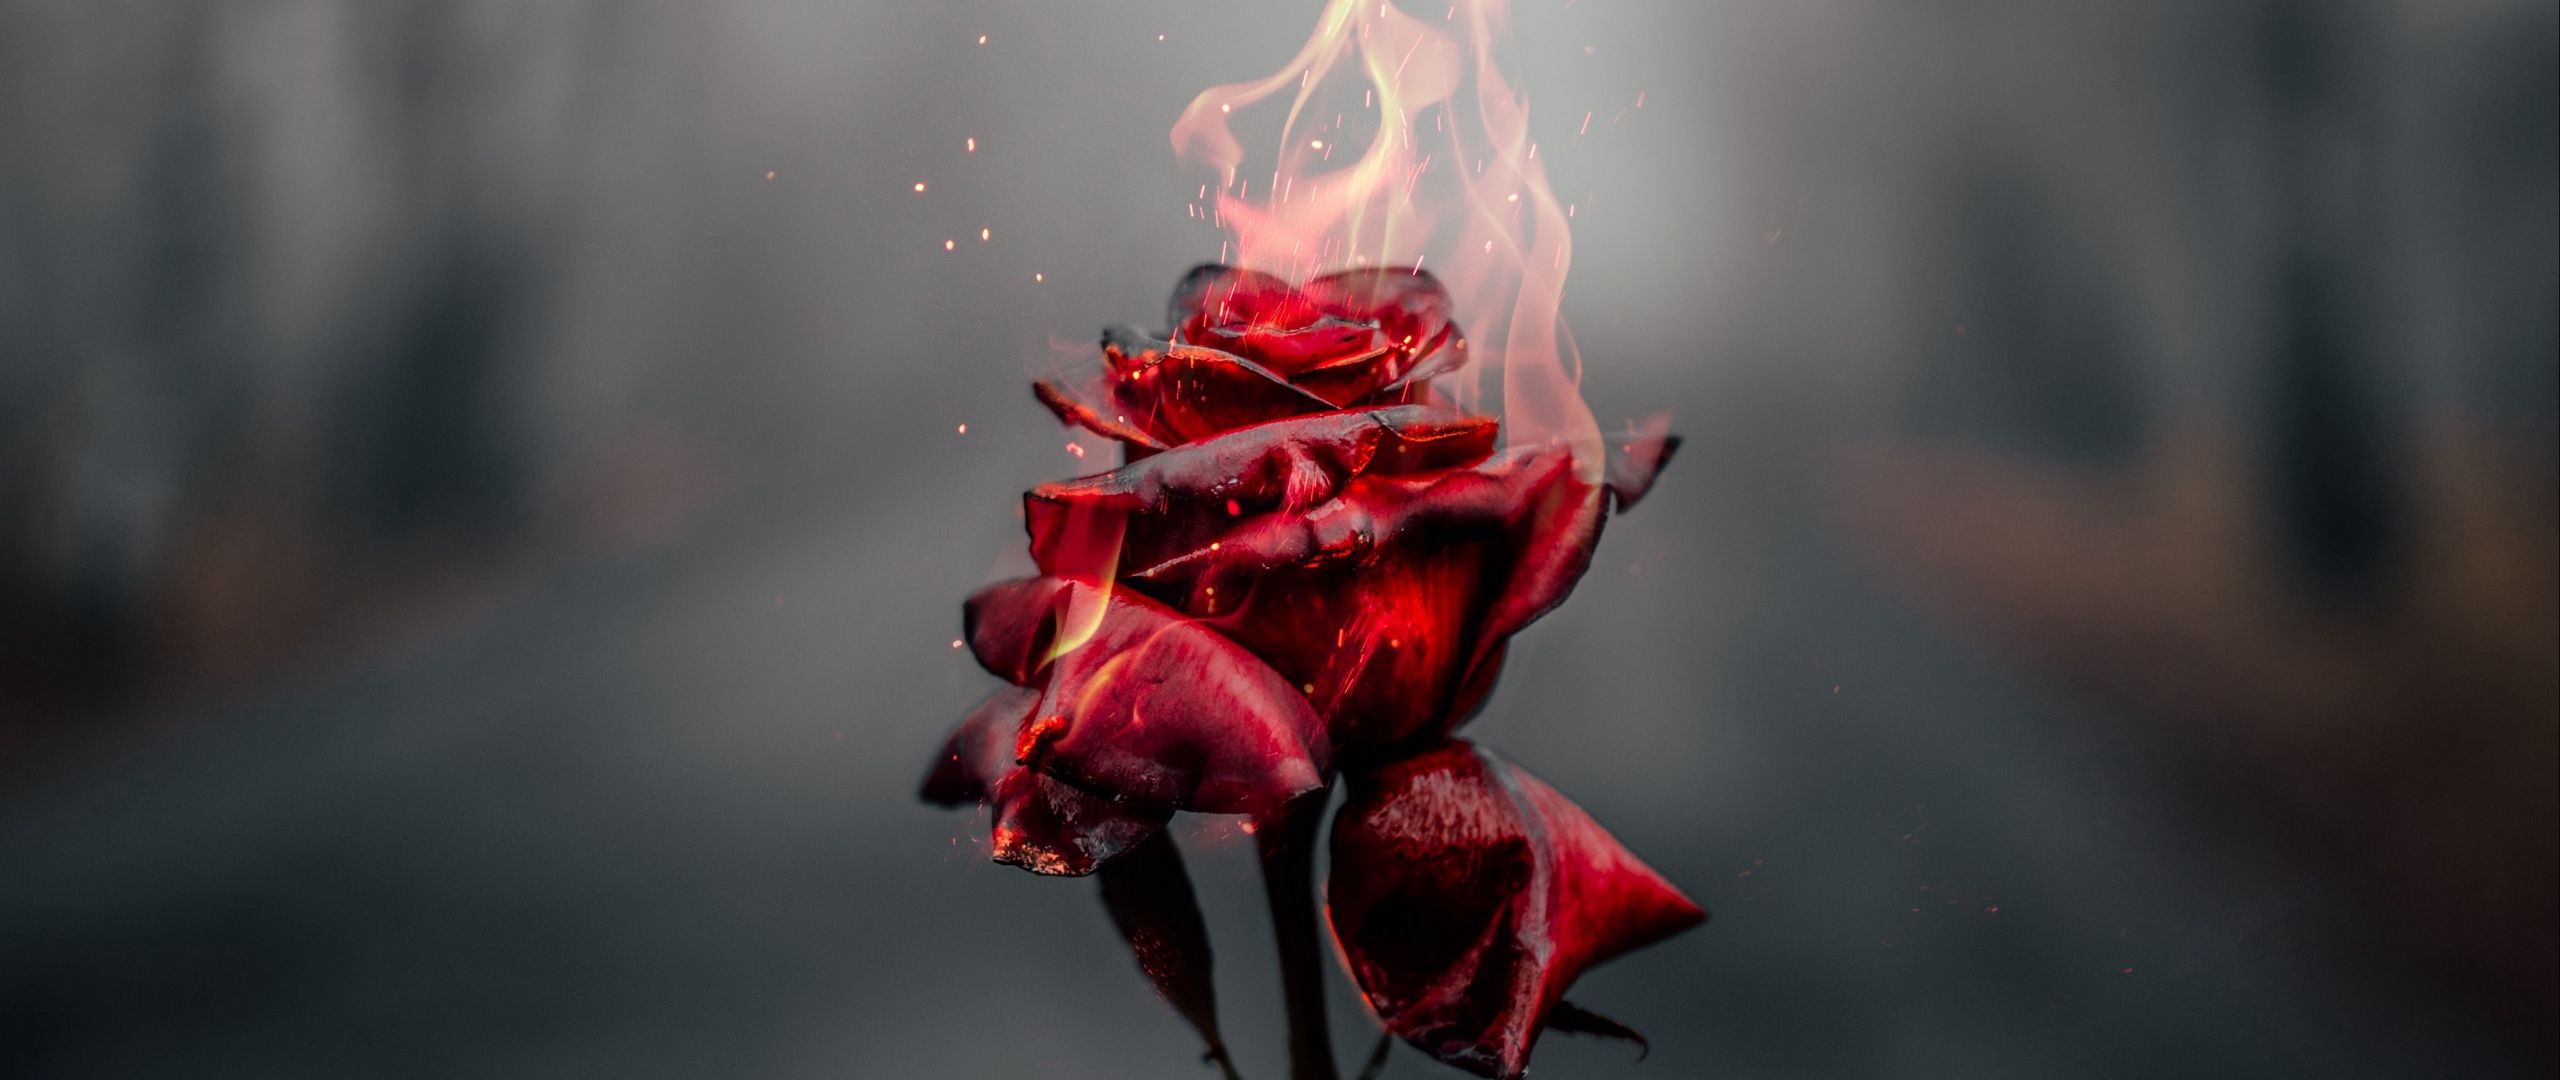 Rose in fire Wallpaper 2k Quad HD